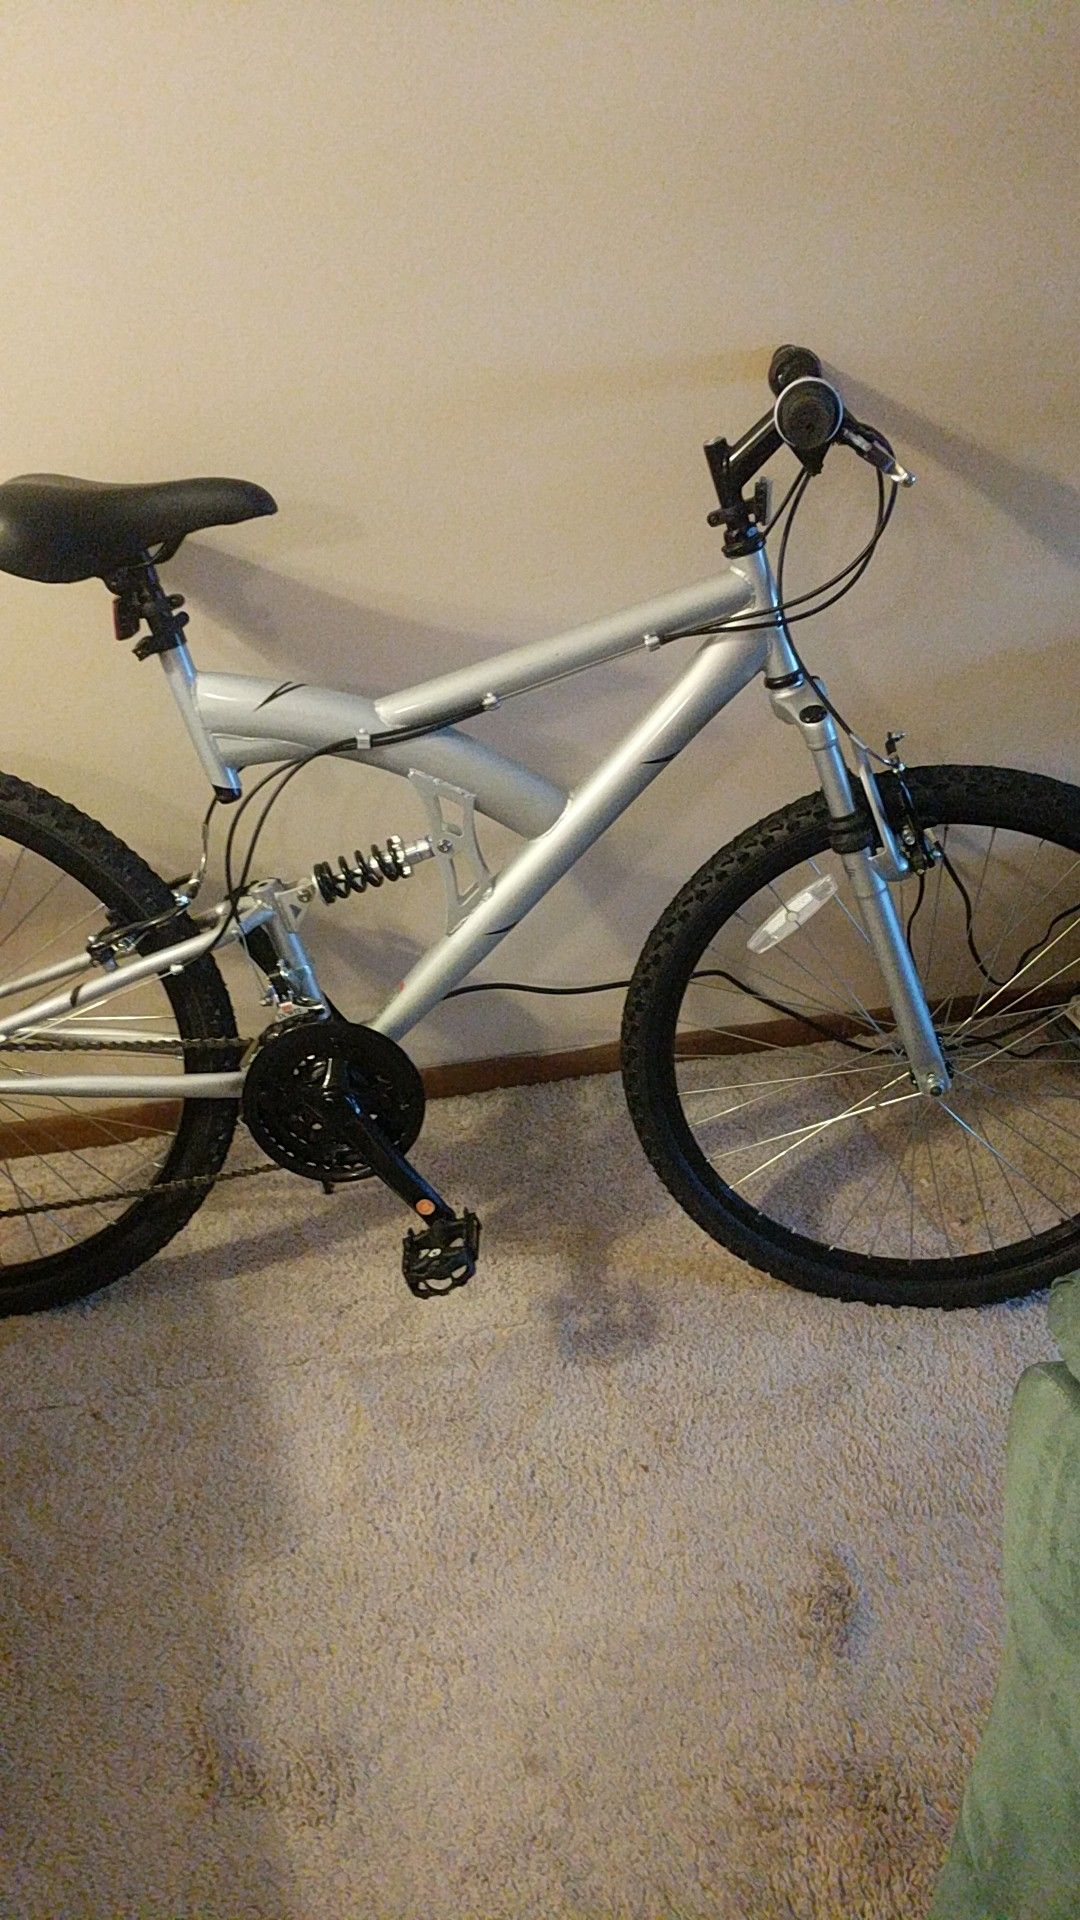 New bike